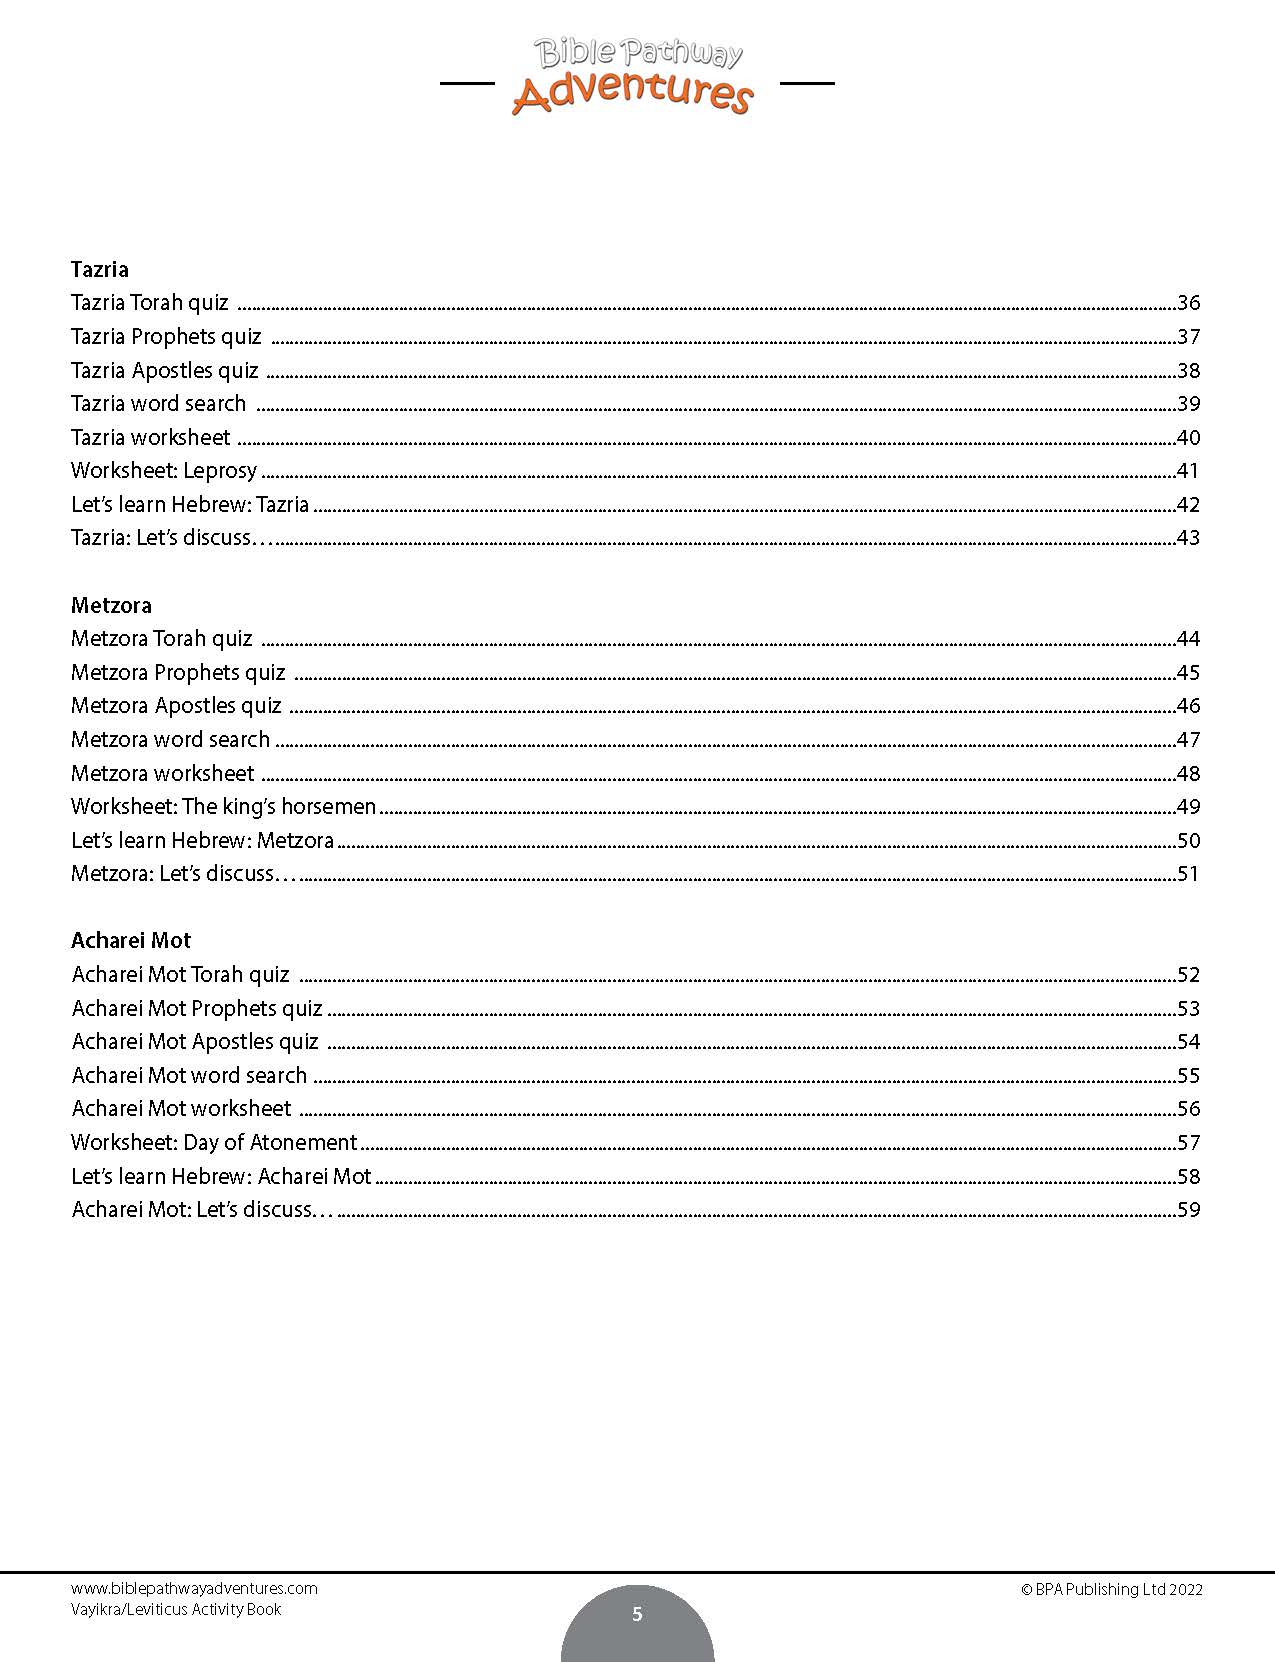 Vayikra / Leviticus Torah Portion Activity Book (PDF)